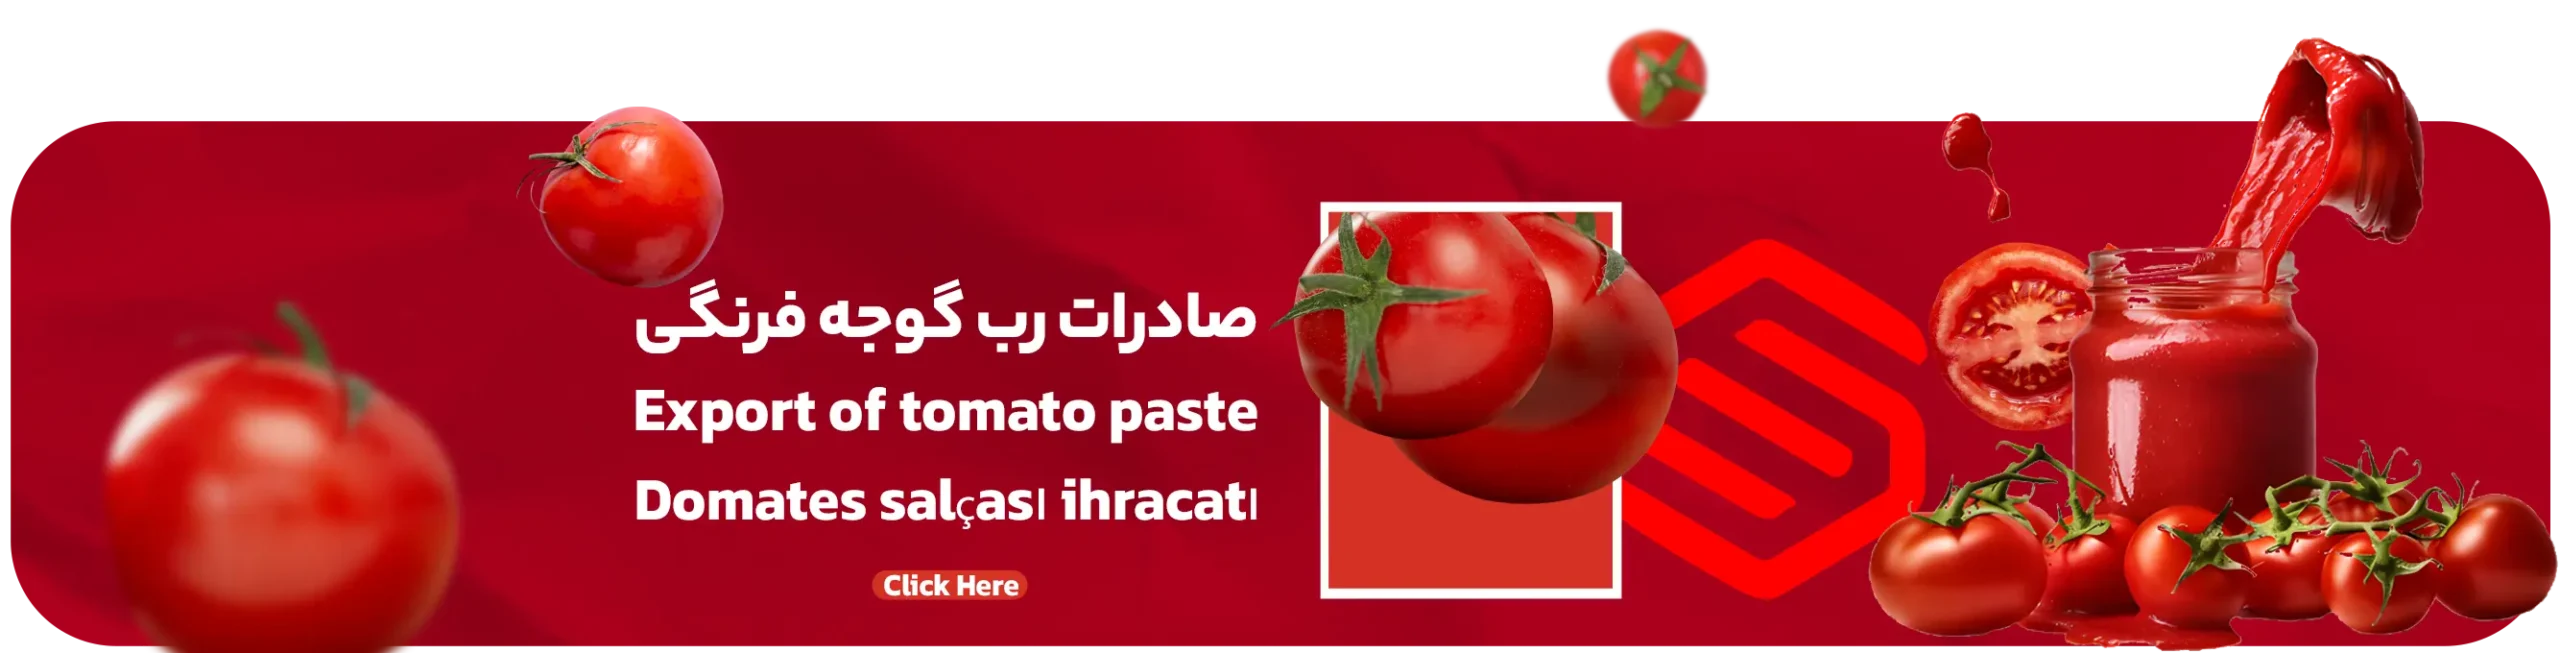 Tomato paste banner scaled 1